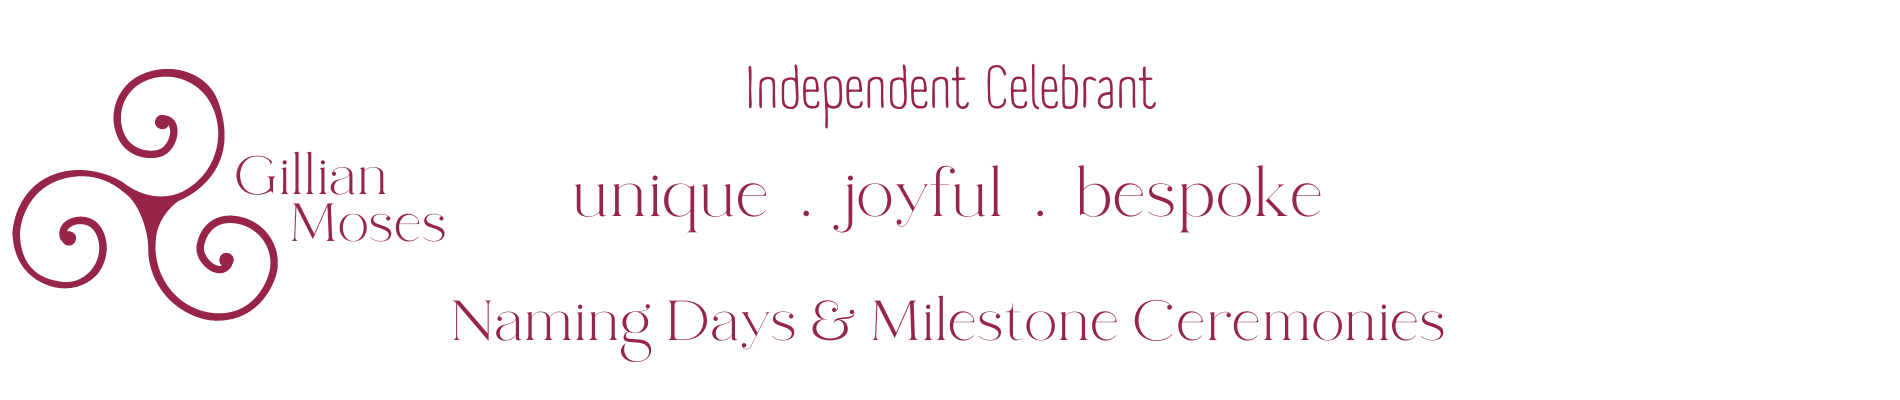 Gillian Moses Independent Celebrant offering unique, joyful, bespoke Naming Days and Milestone Ceremonies